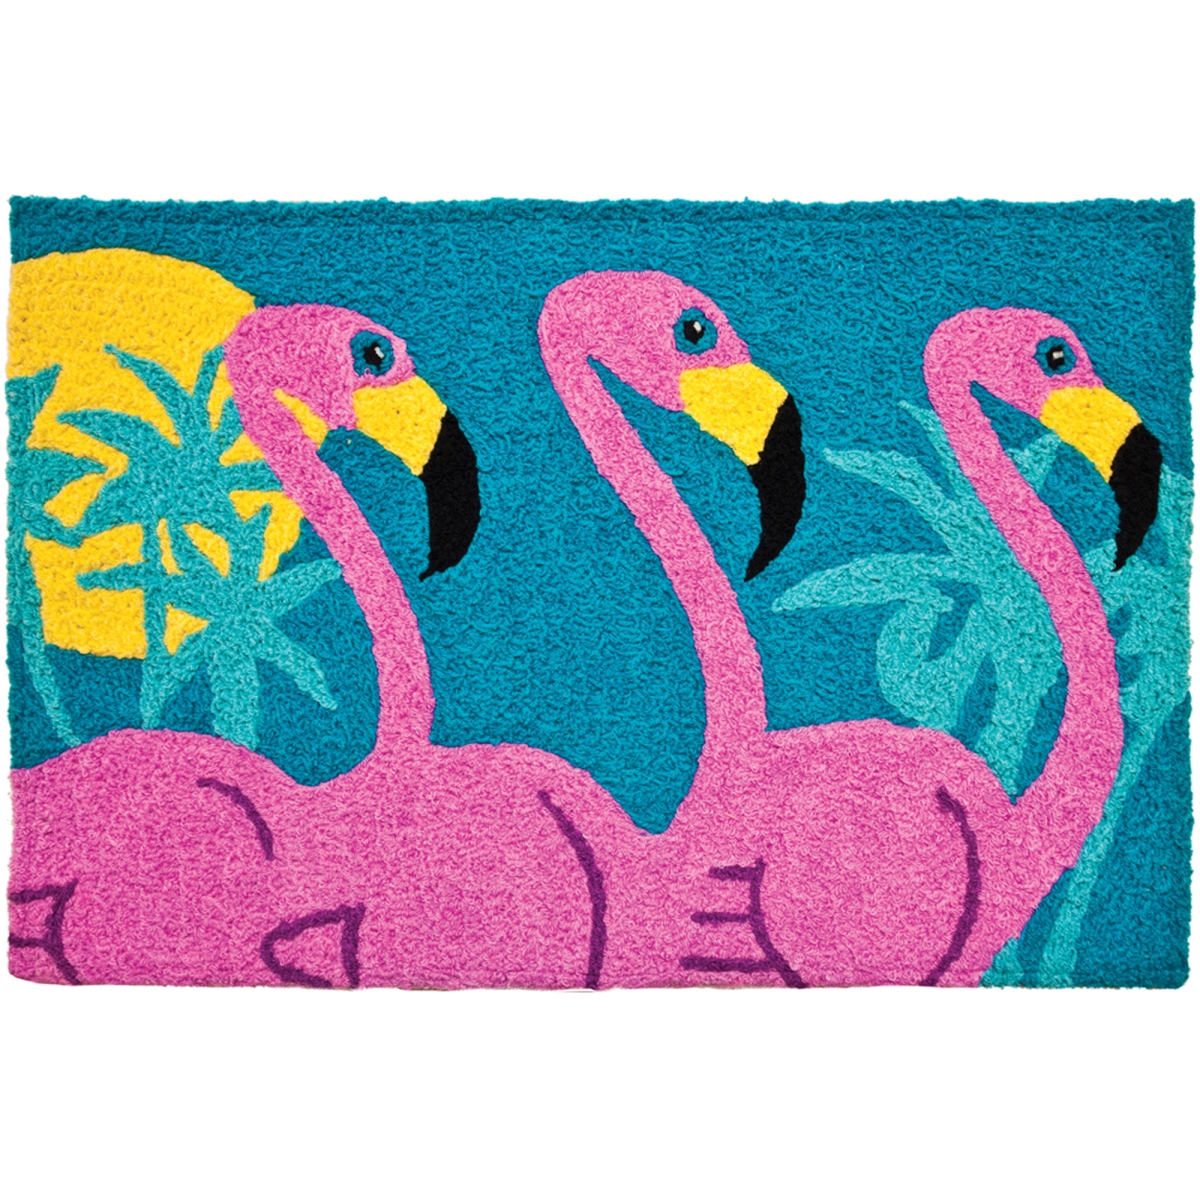 Jb-avh008 20 X 30 In. Tropical Flamingos Rug